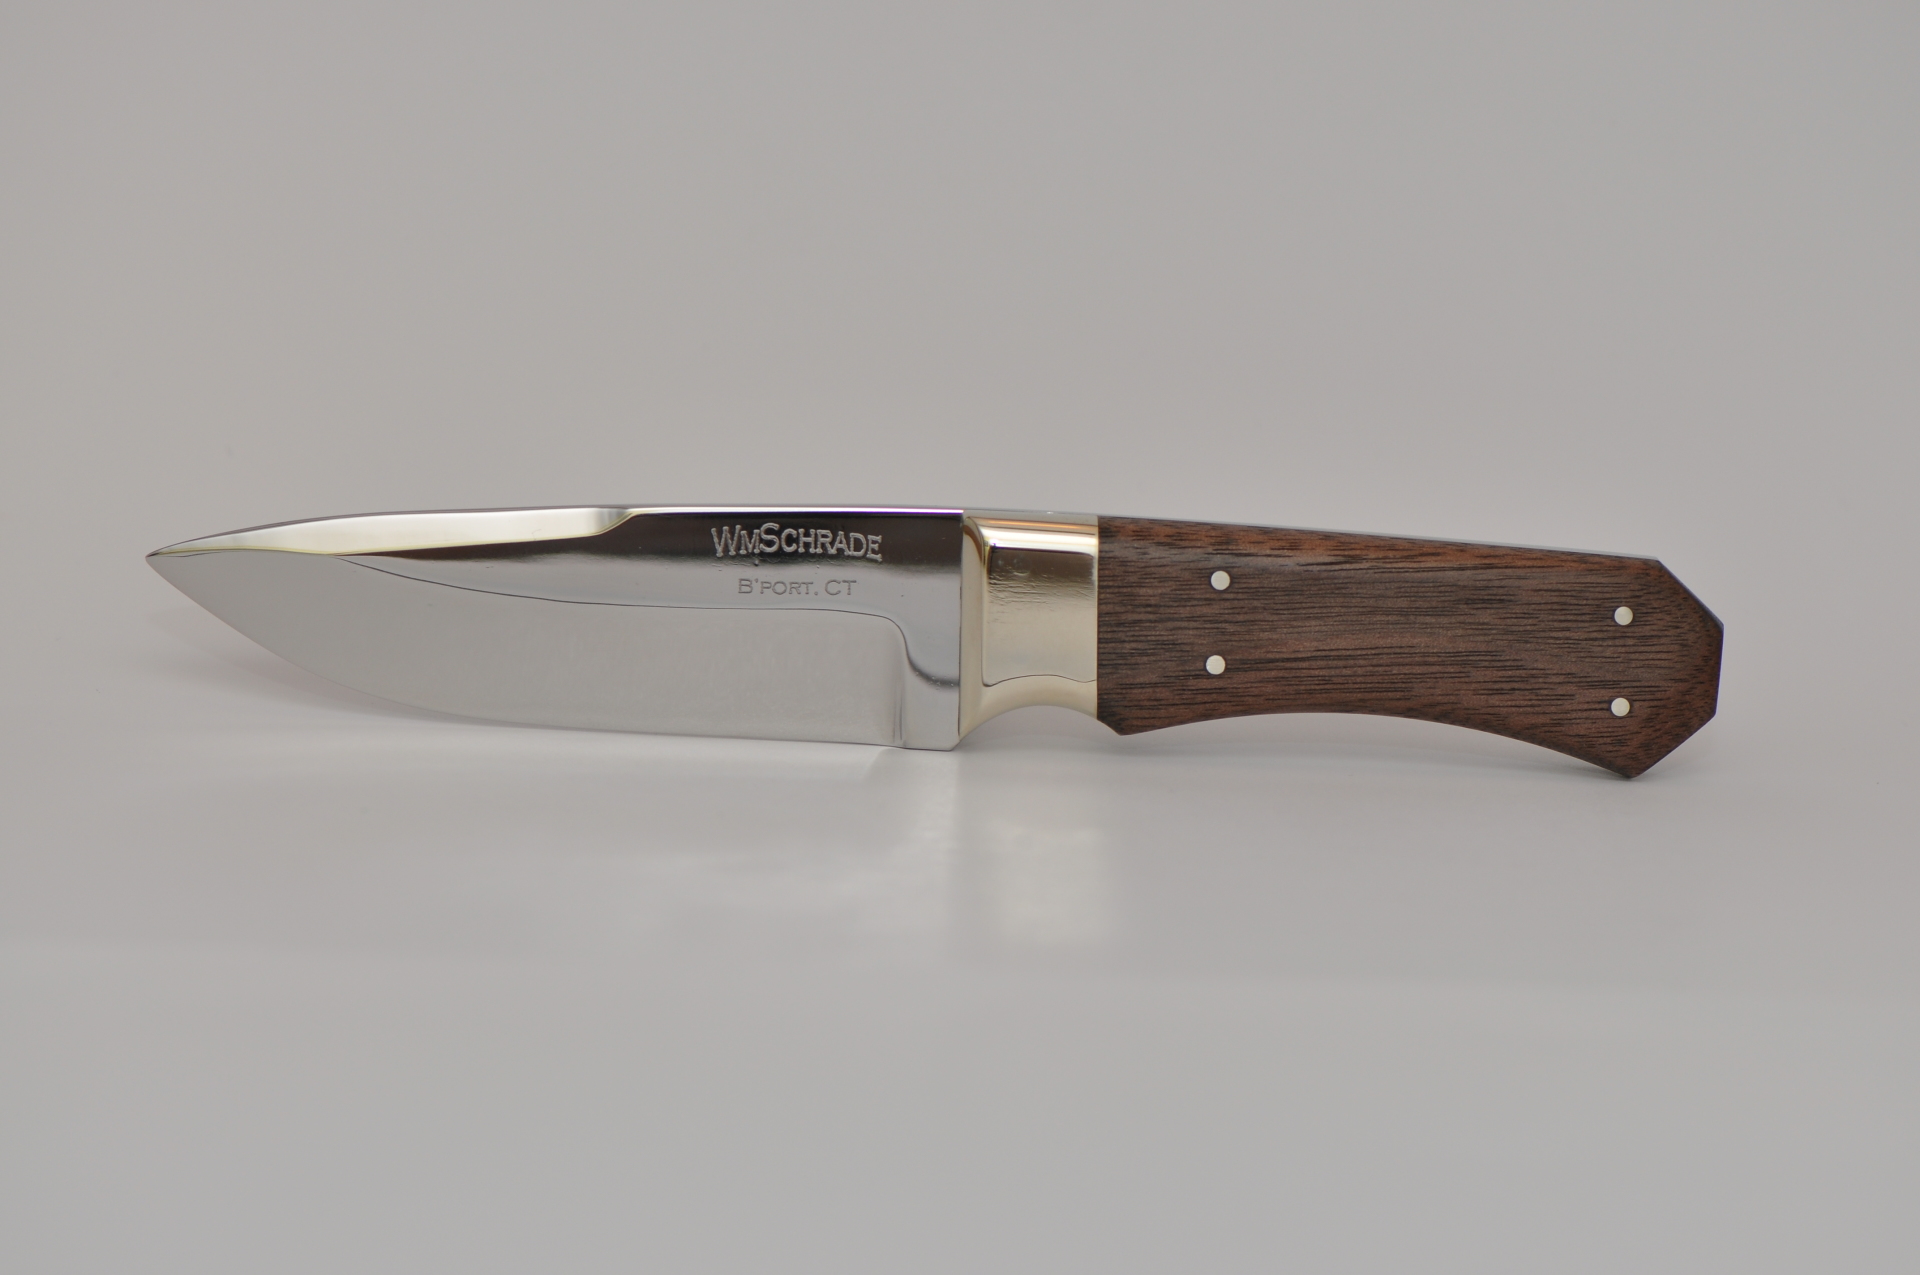 William Schrade 4th generation custom knife maker